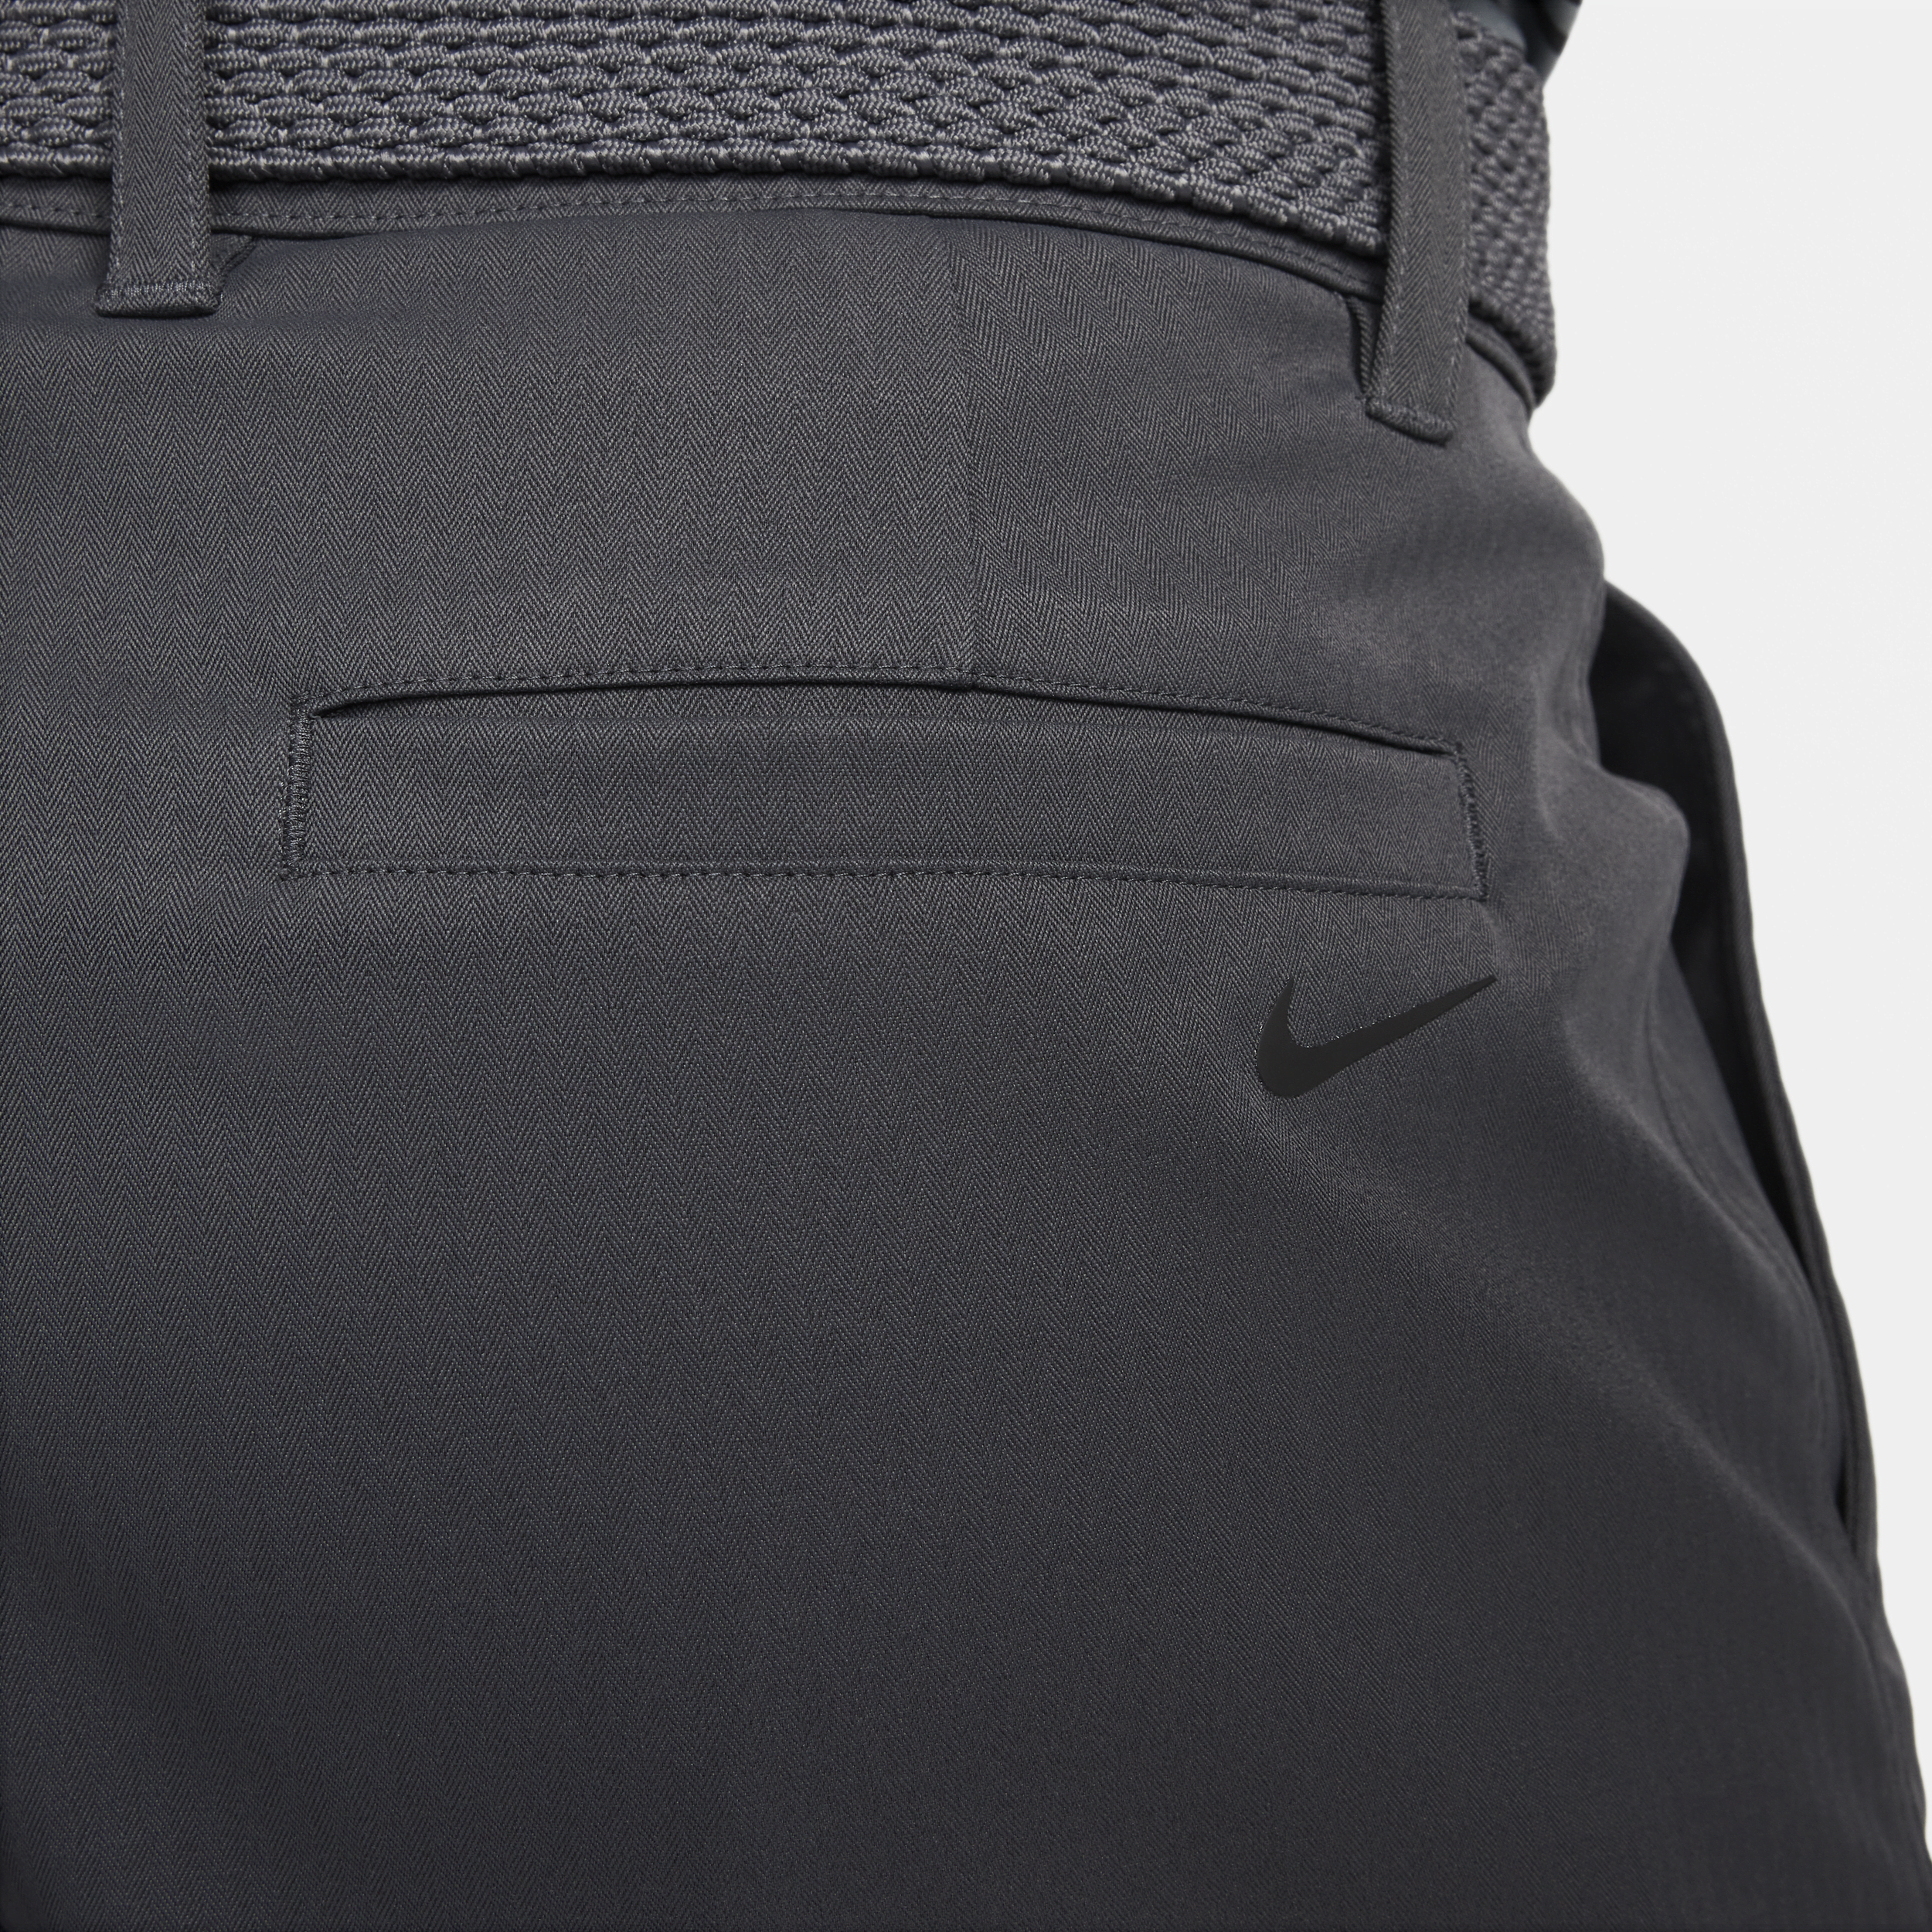 Nike Tour Chino golfshorts voor heren (20 cm) Grijs